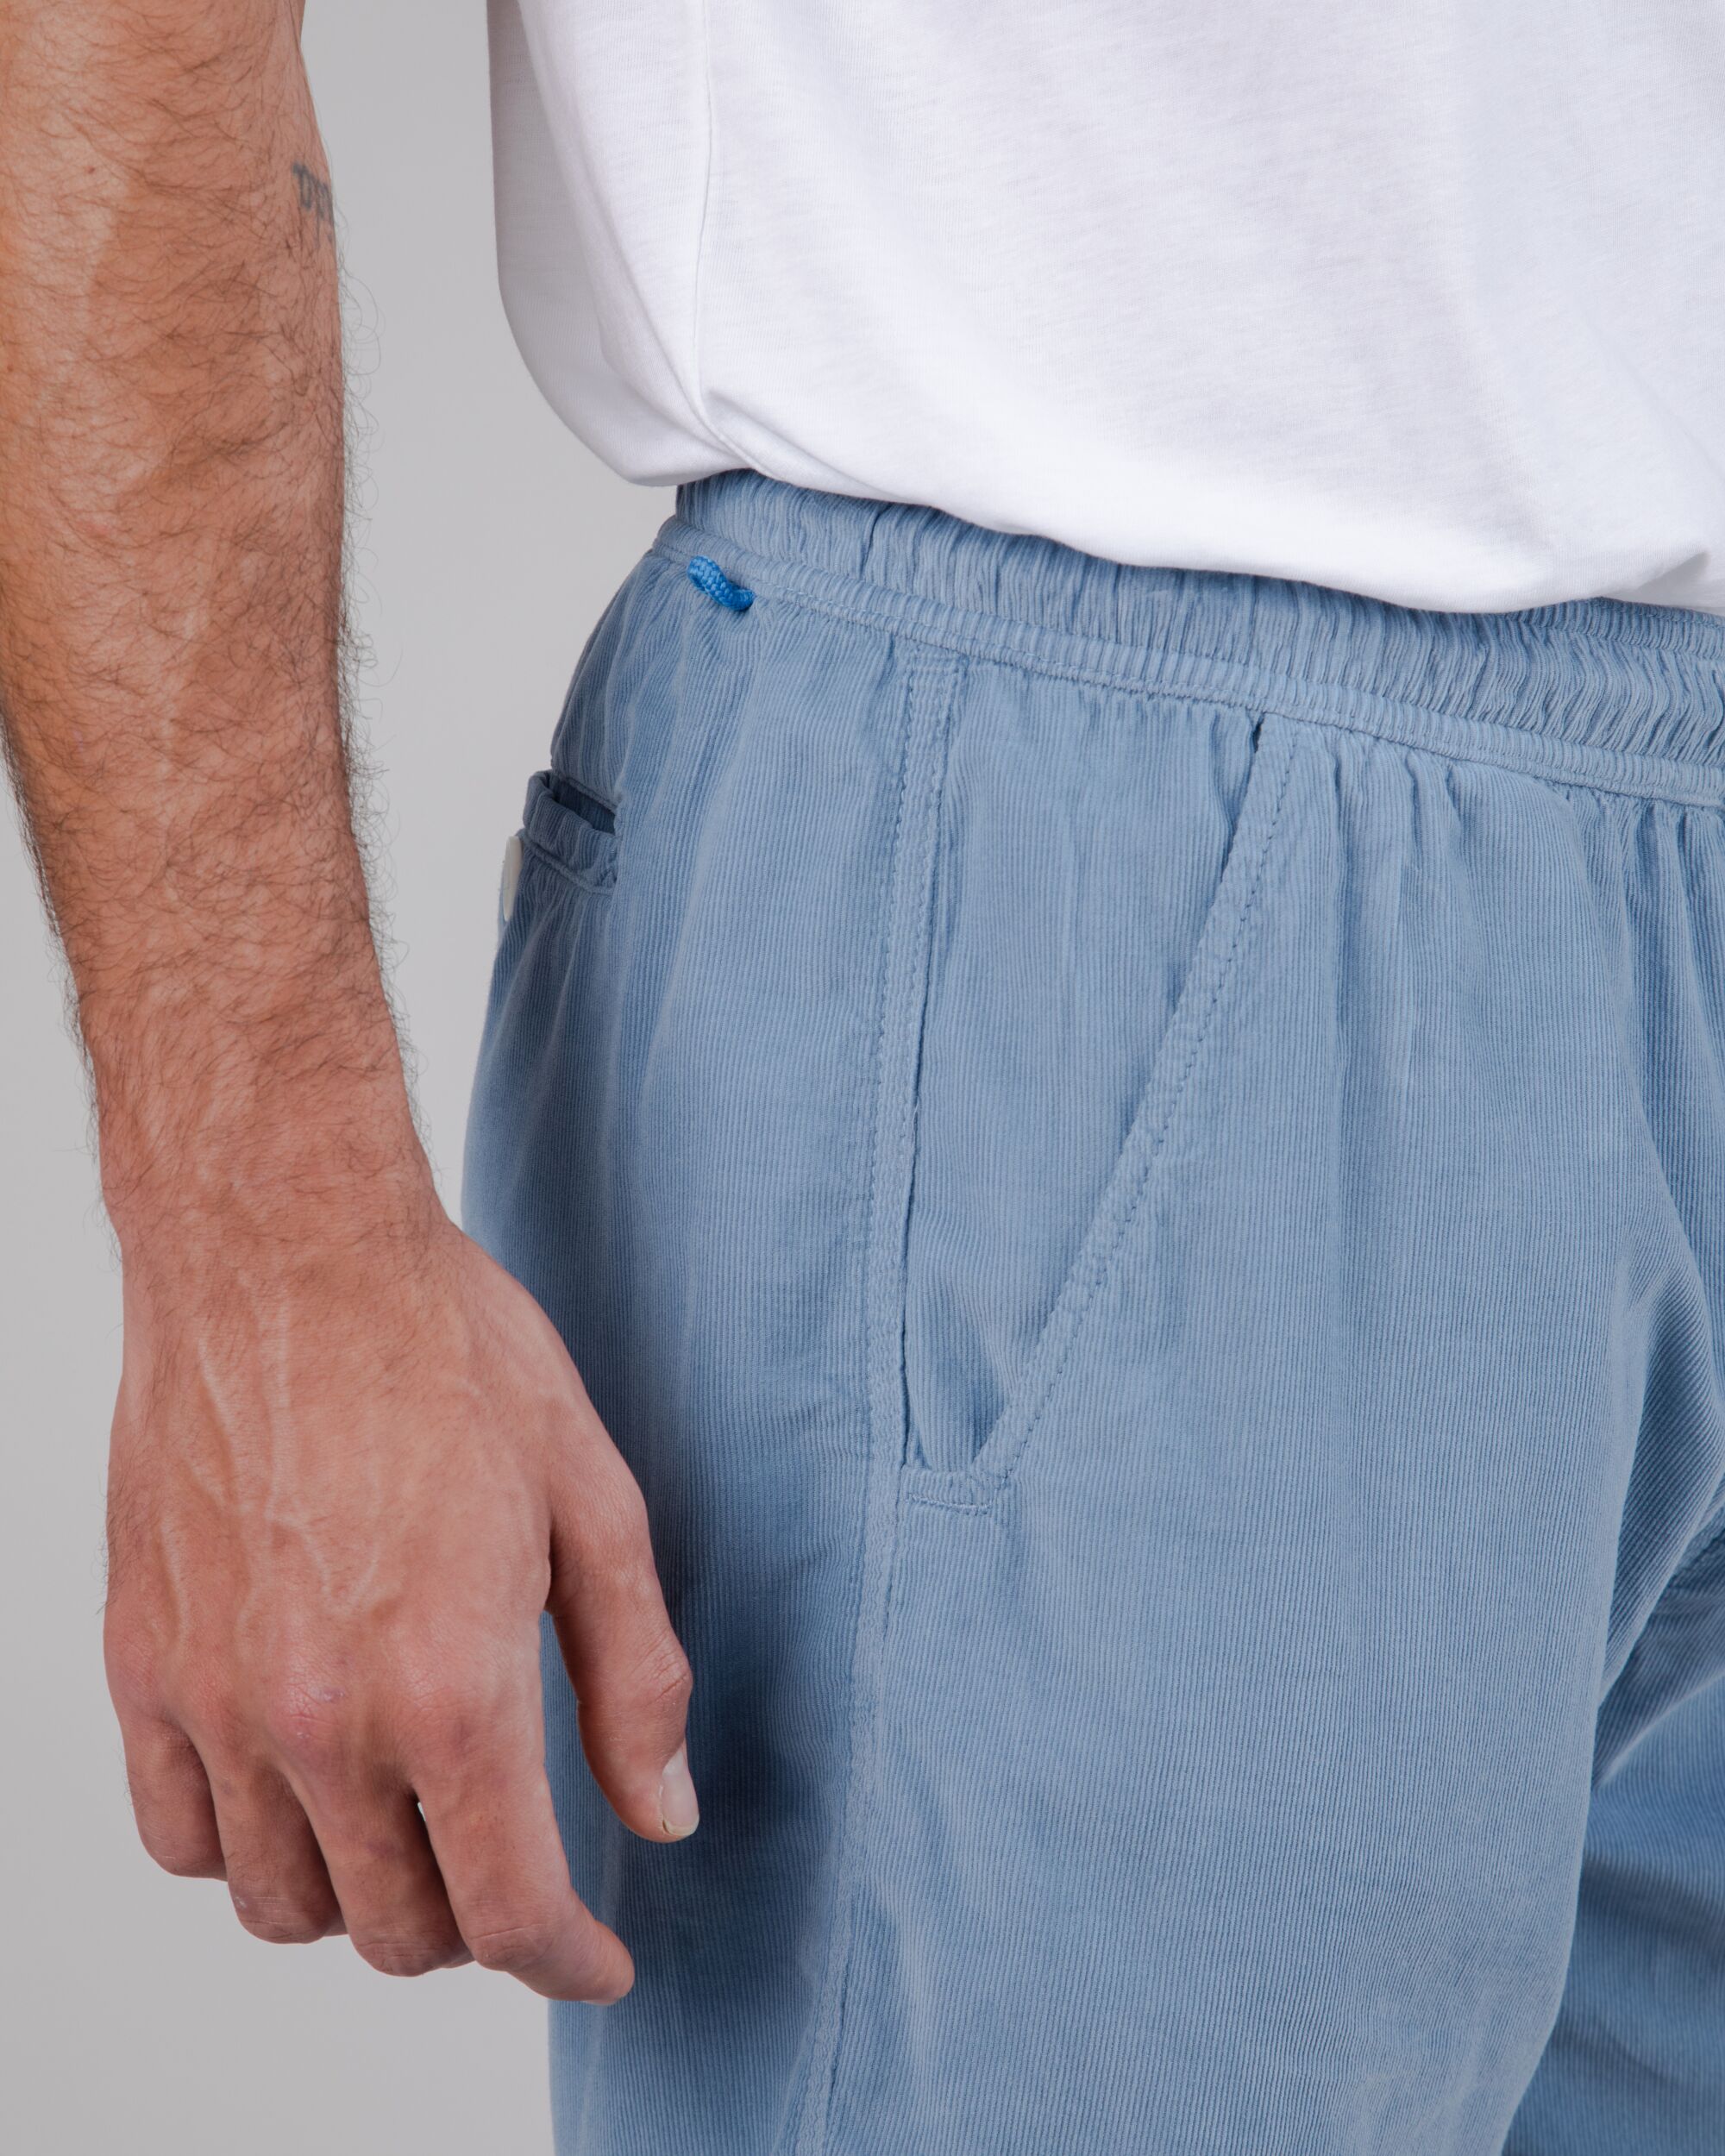 Baby Cord Short Blue shorts made of organic cotton from Brava Fabrics